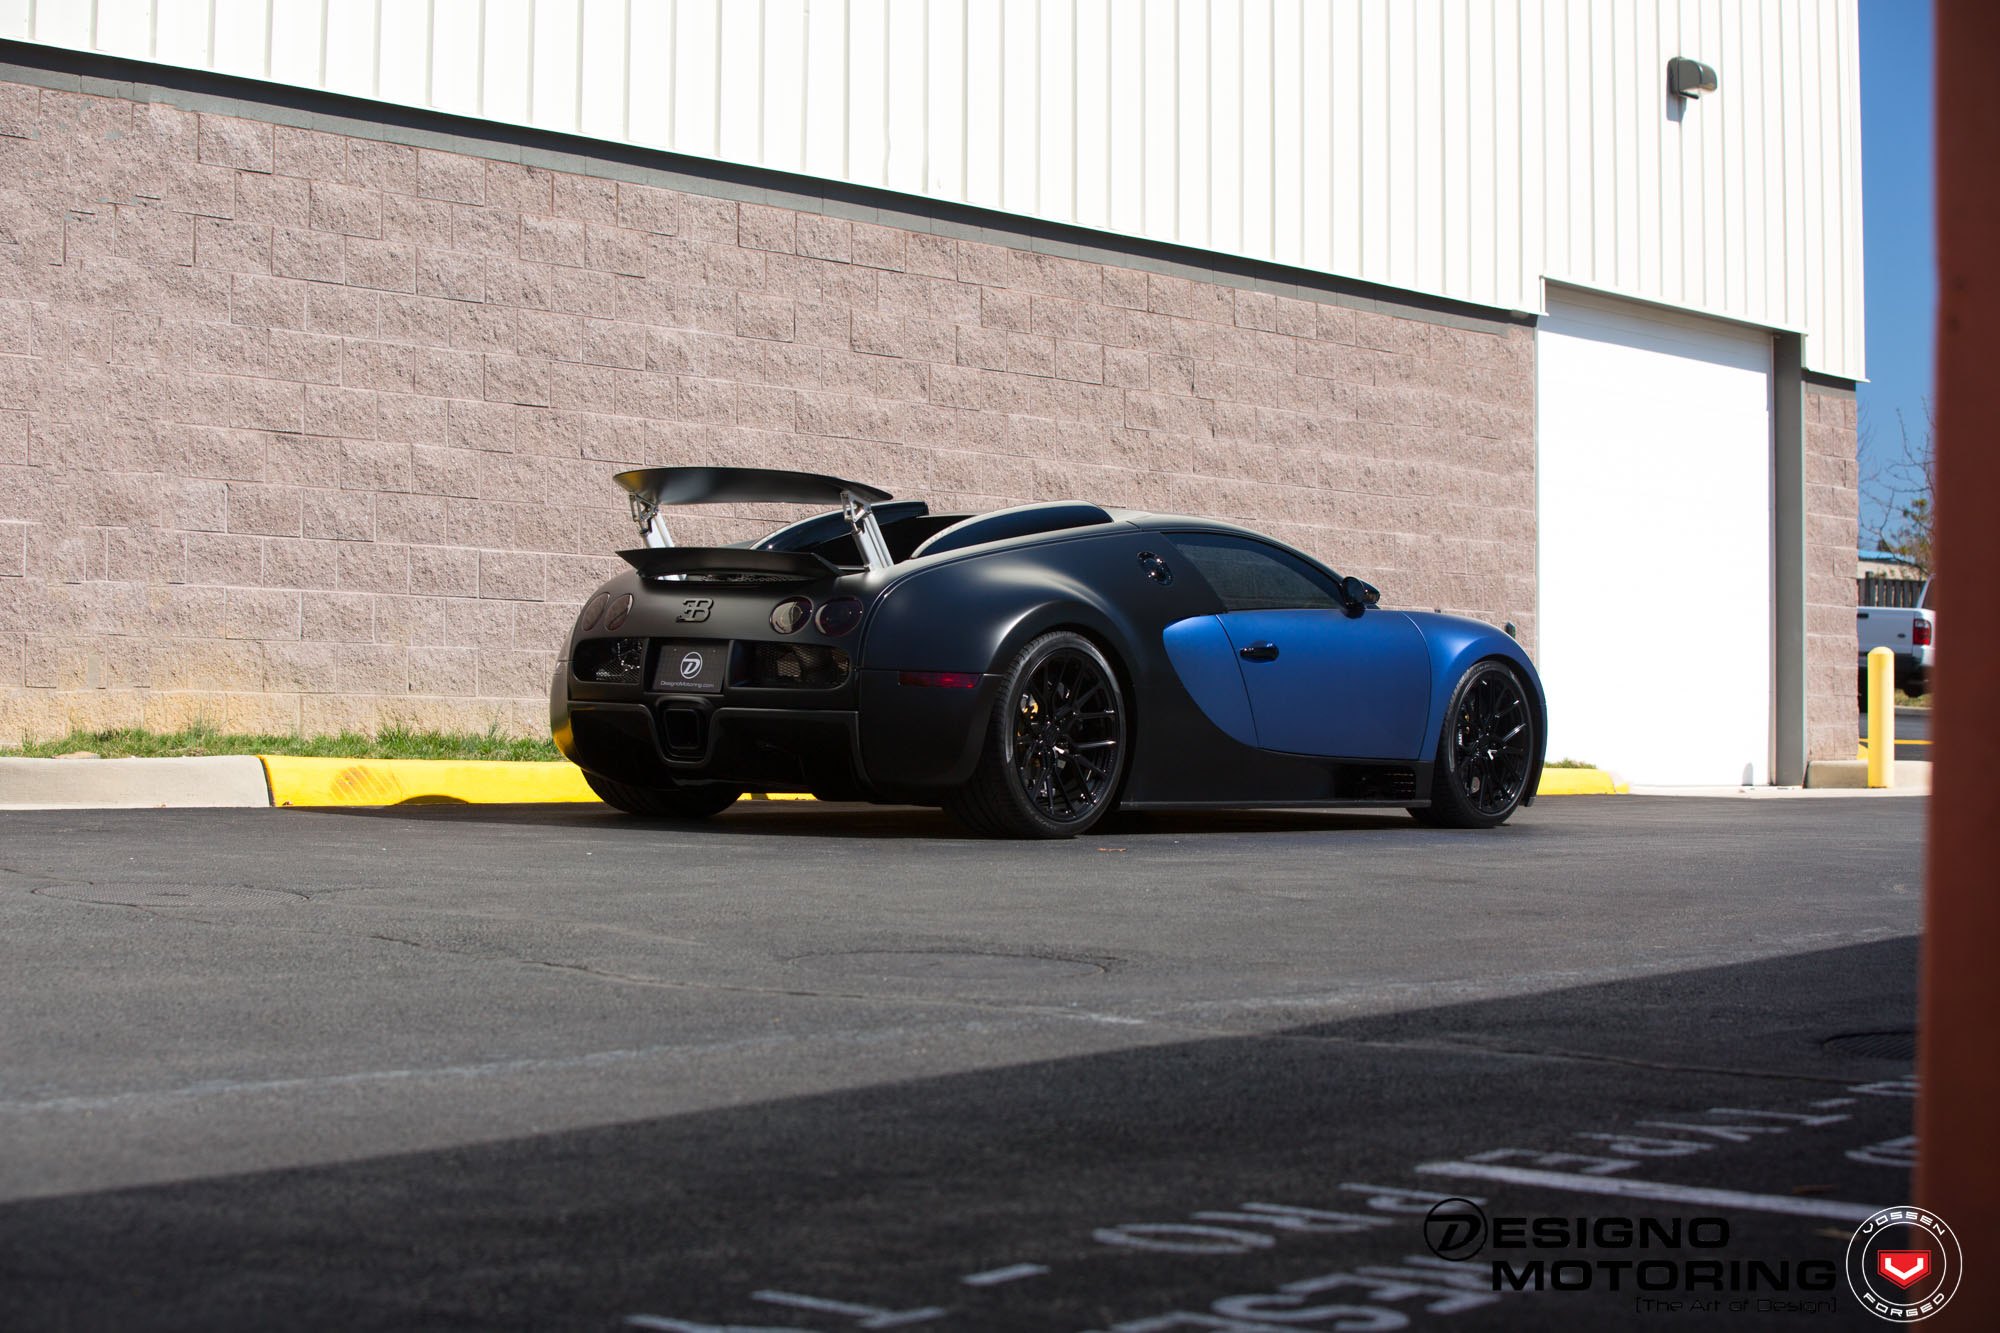 Custom Taillights on Dark Blue Bugatti Veyron - Photo by Vossen